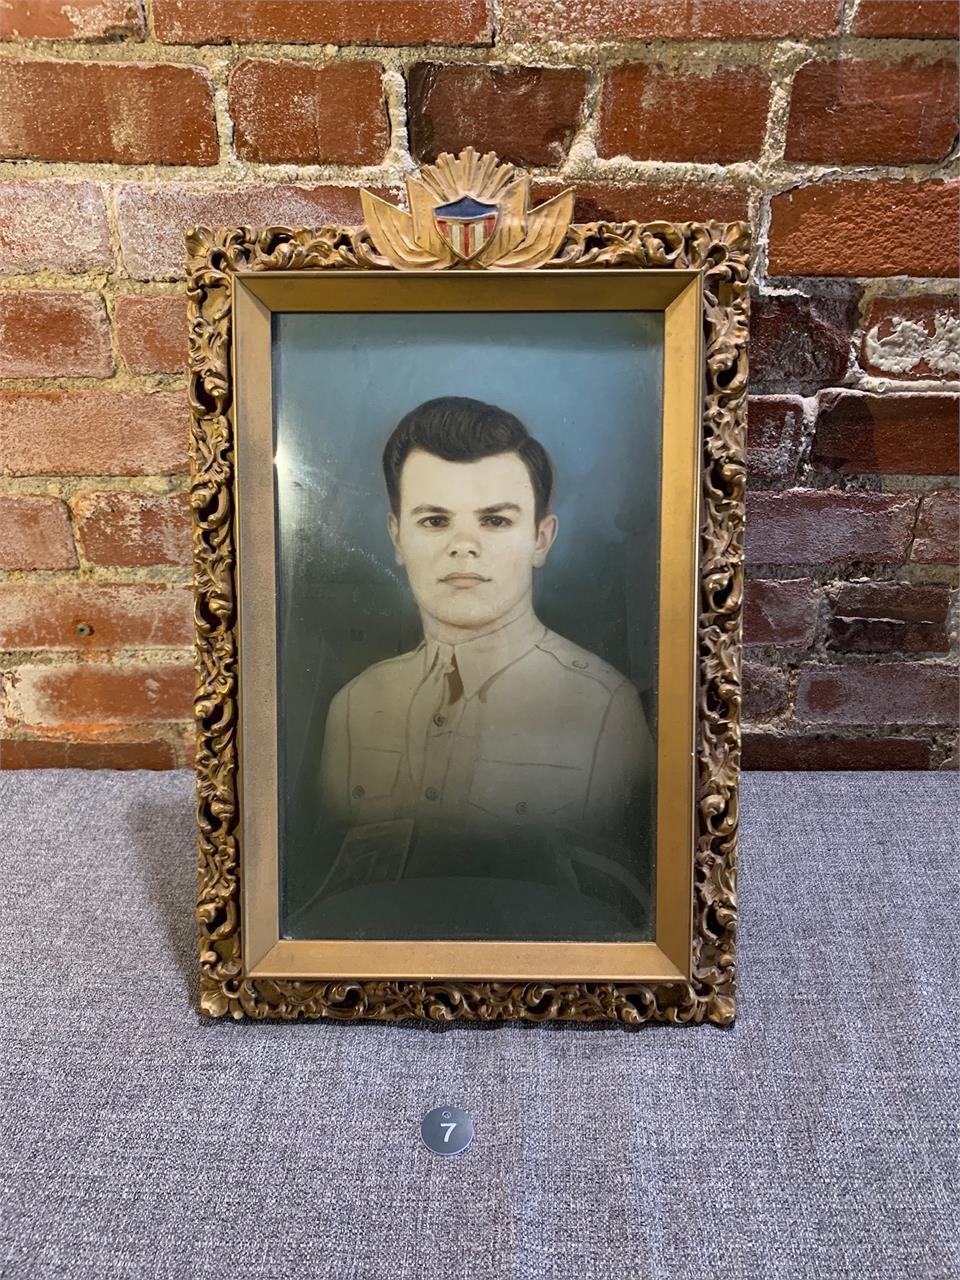 WWII Soldier Portrait in Patriotic Frame